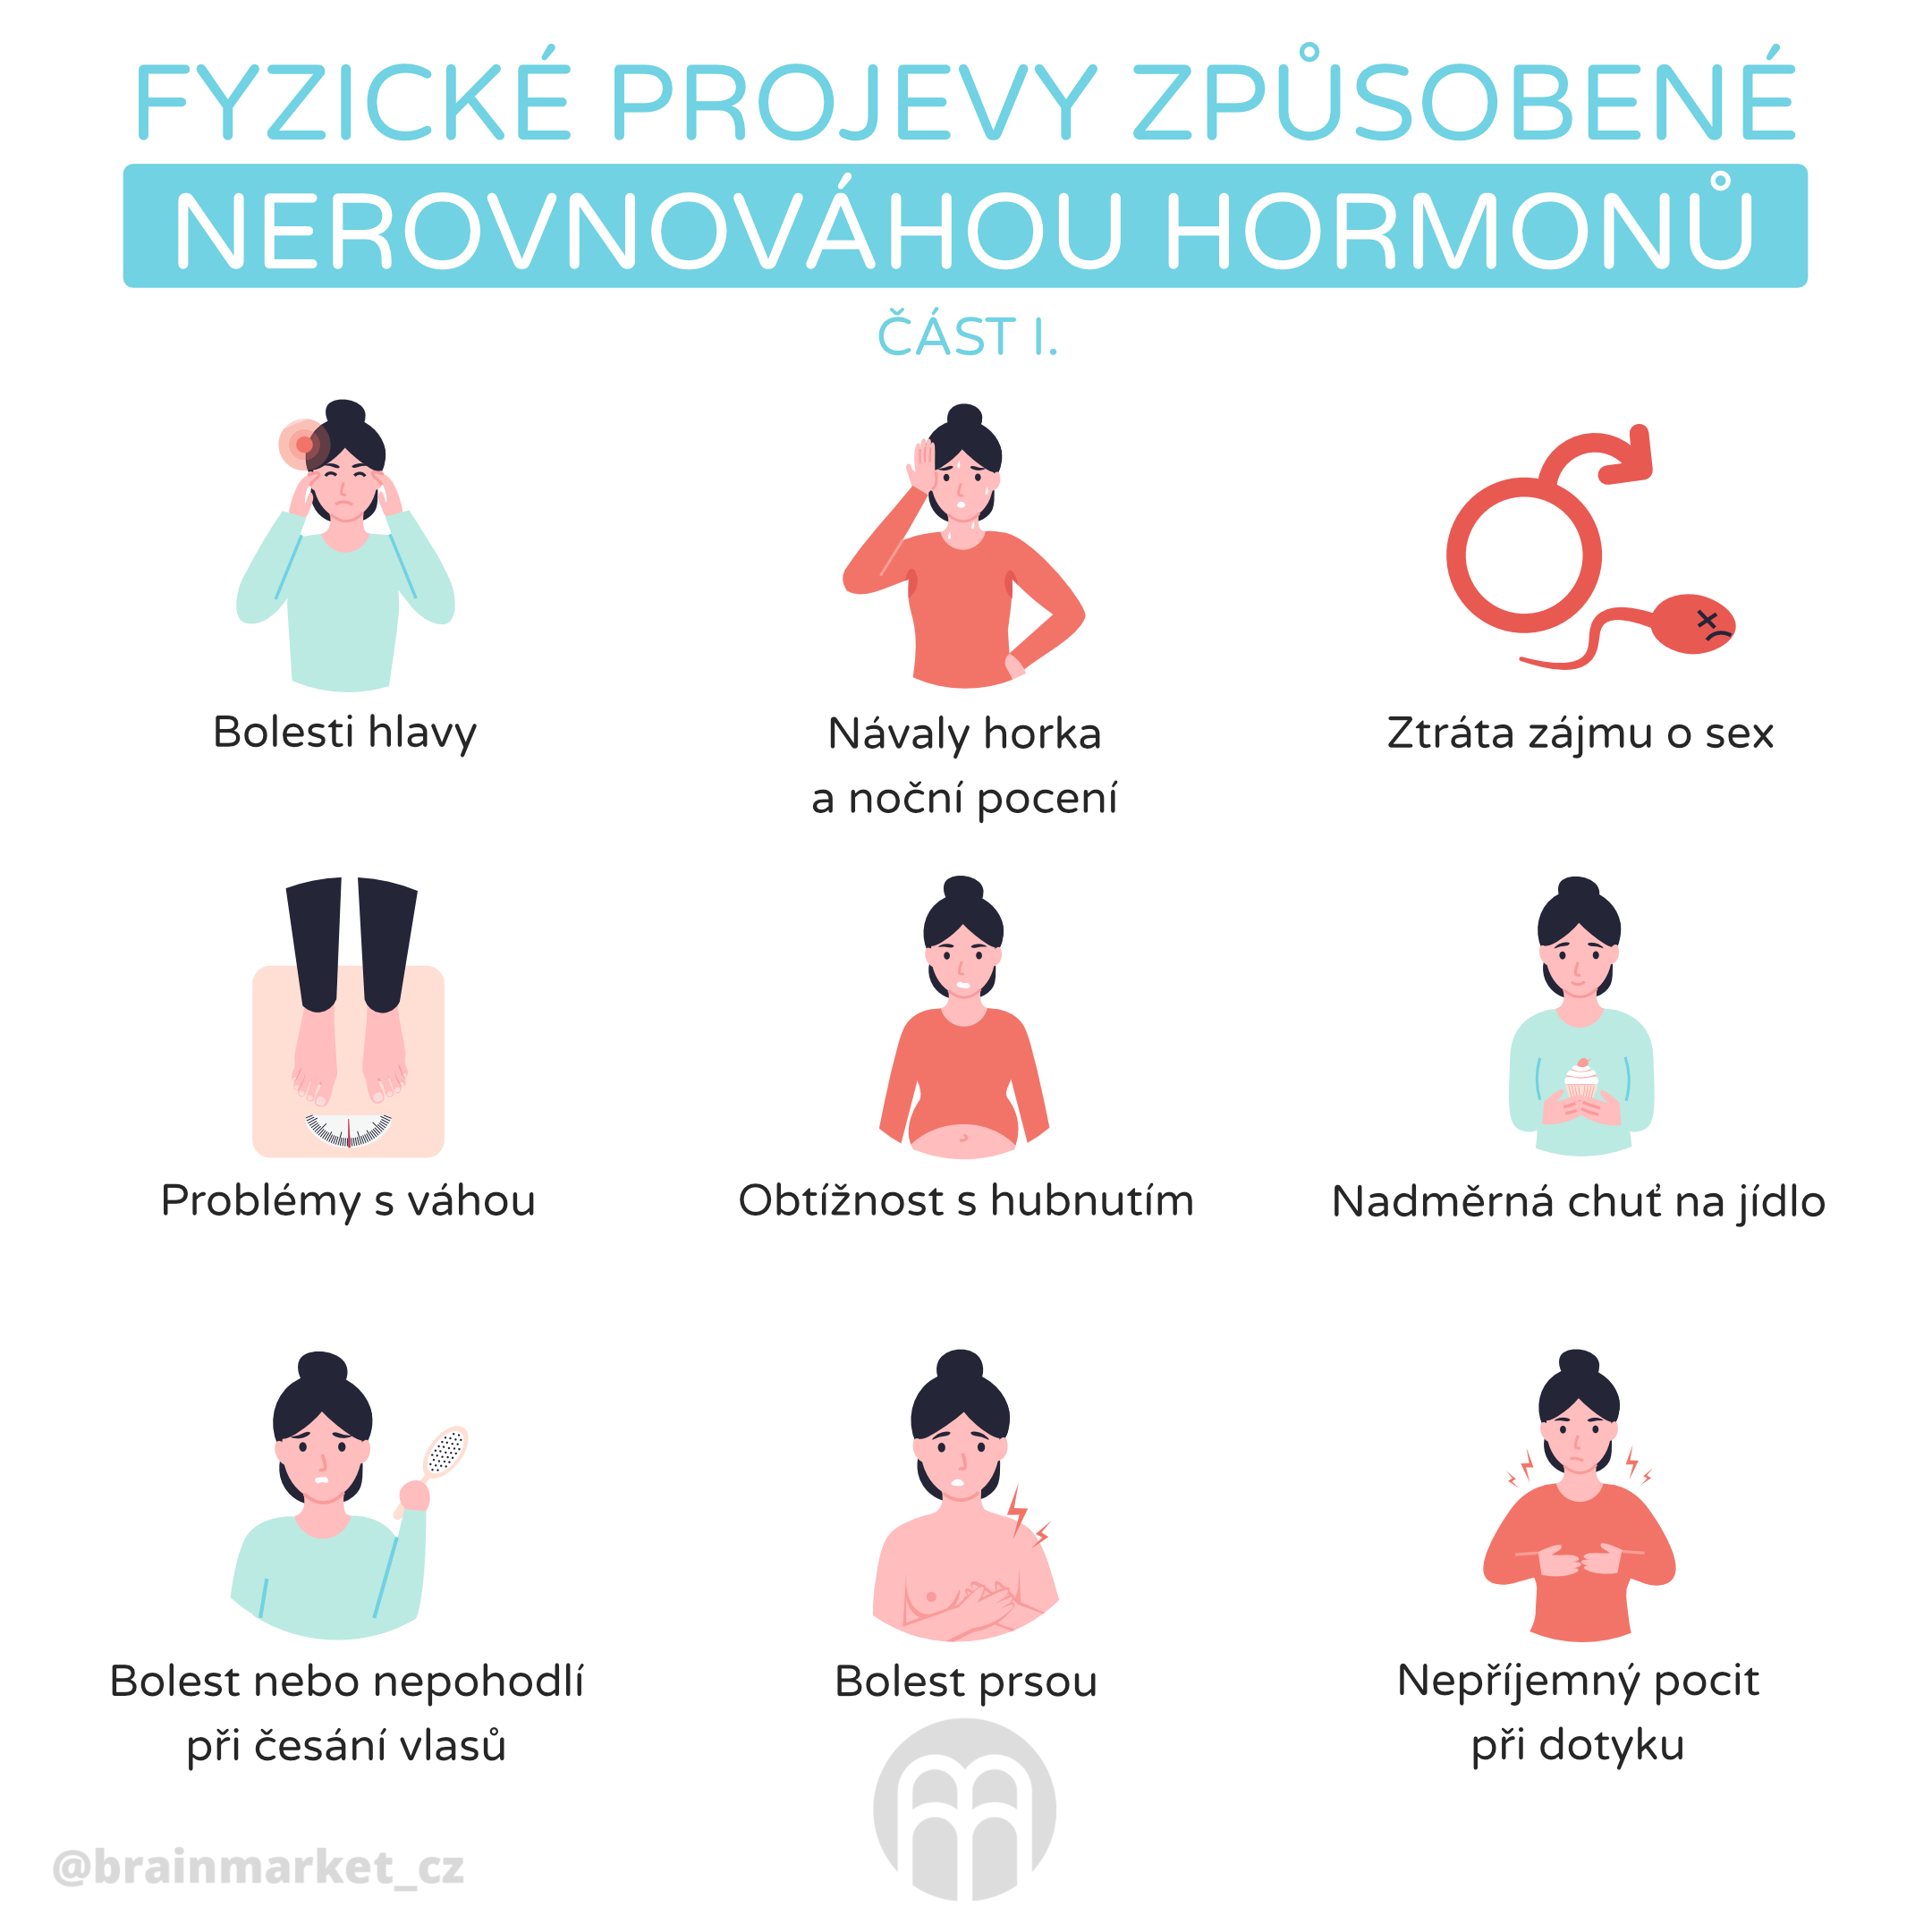 fyzicke projevy nerovnovahy hormonu_cast1_infografika_cz